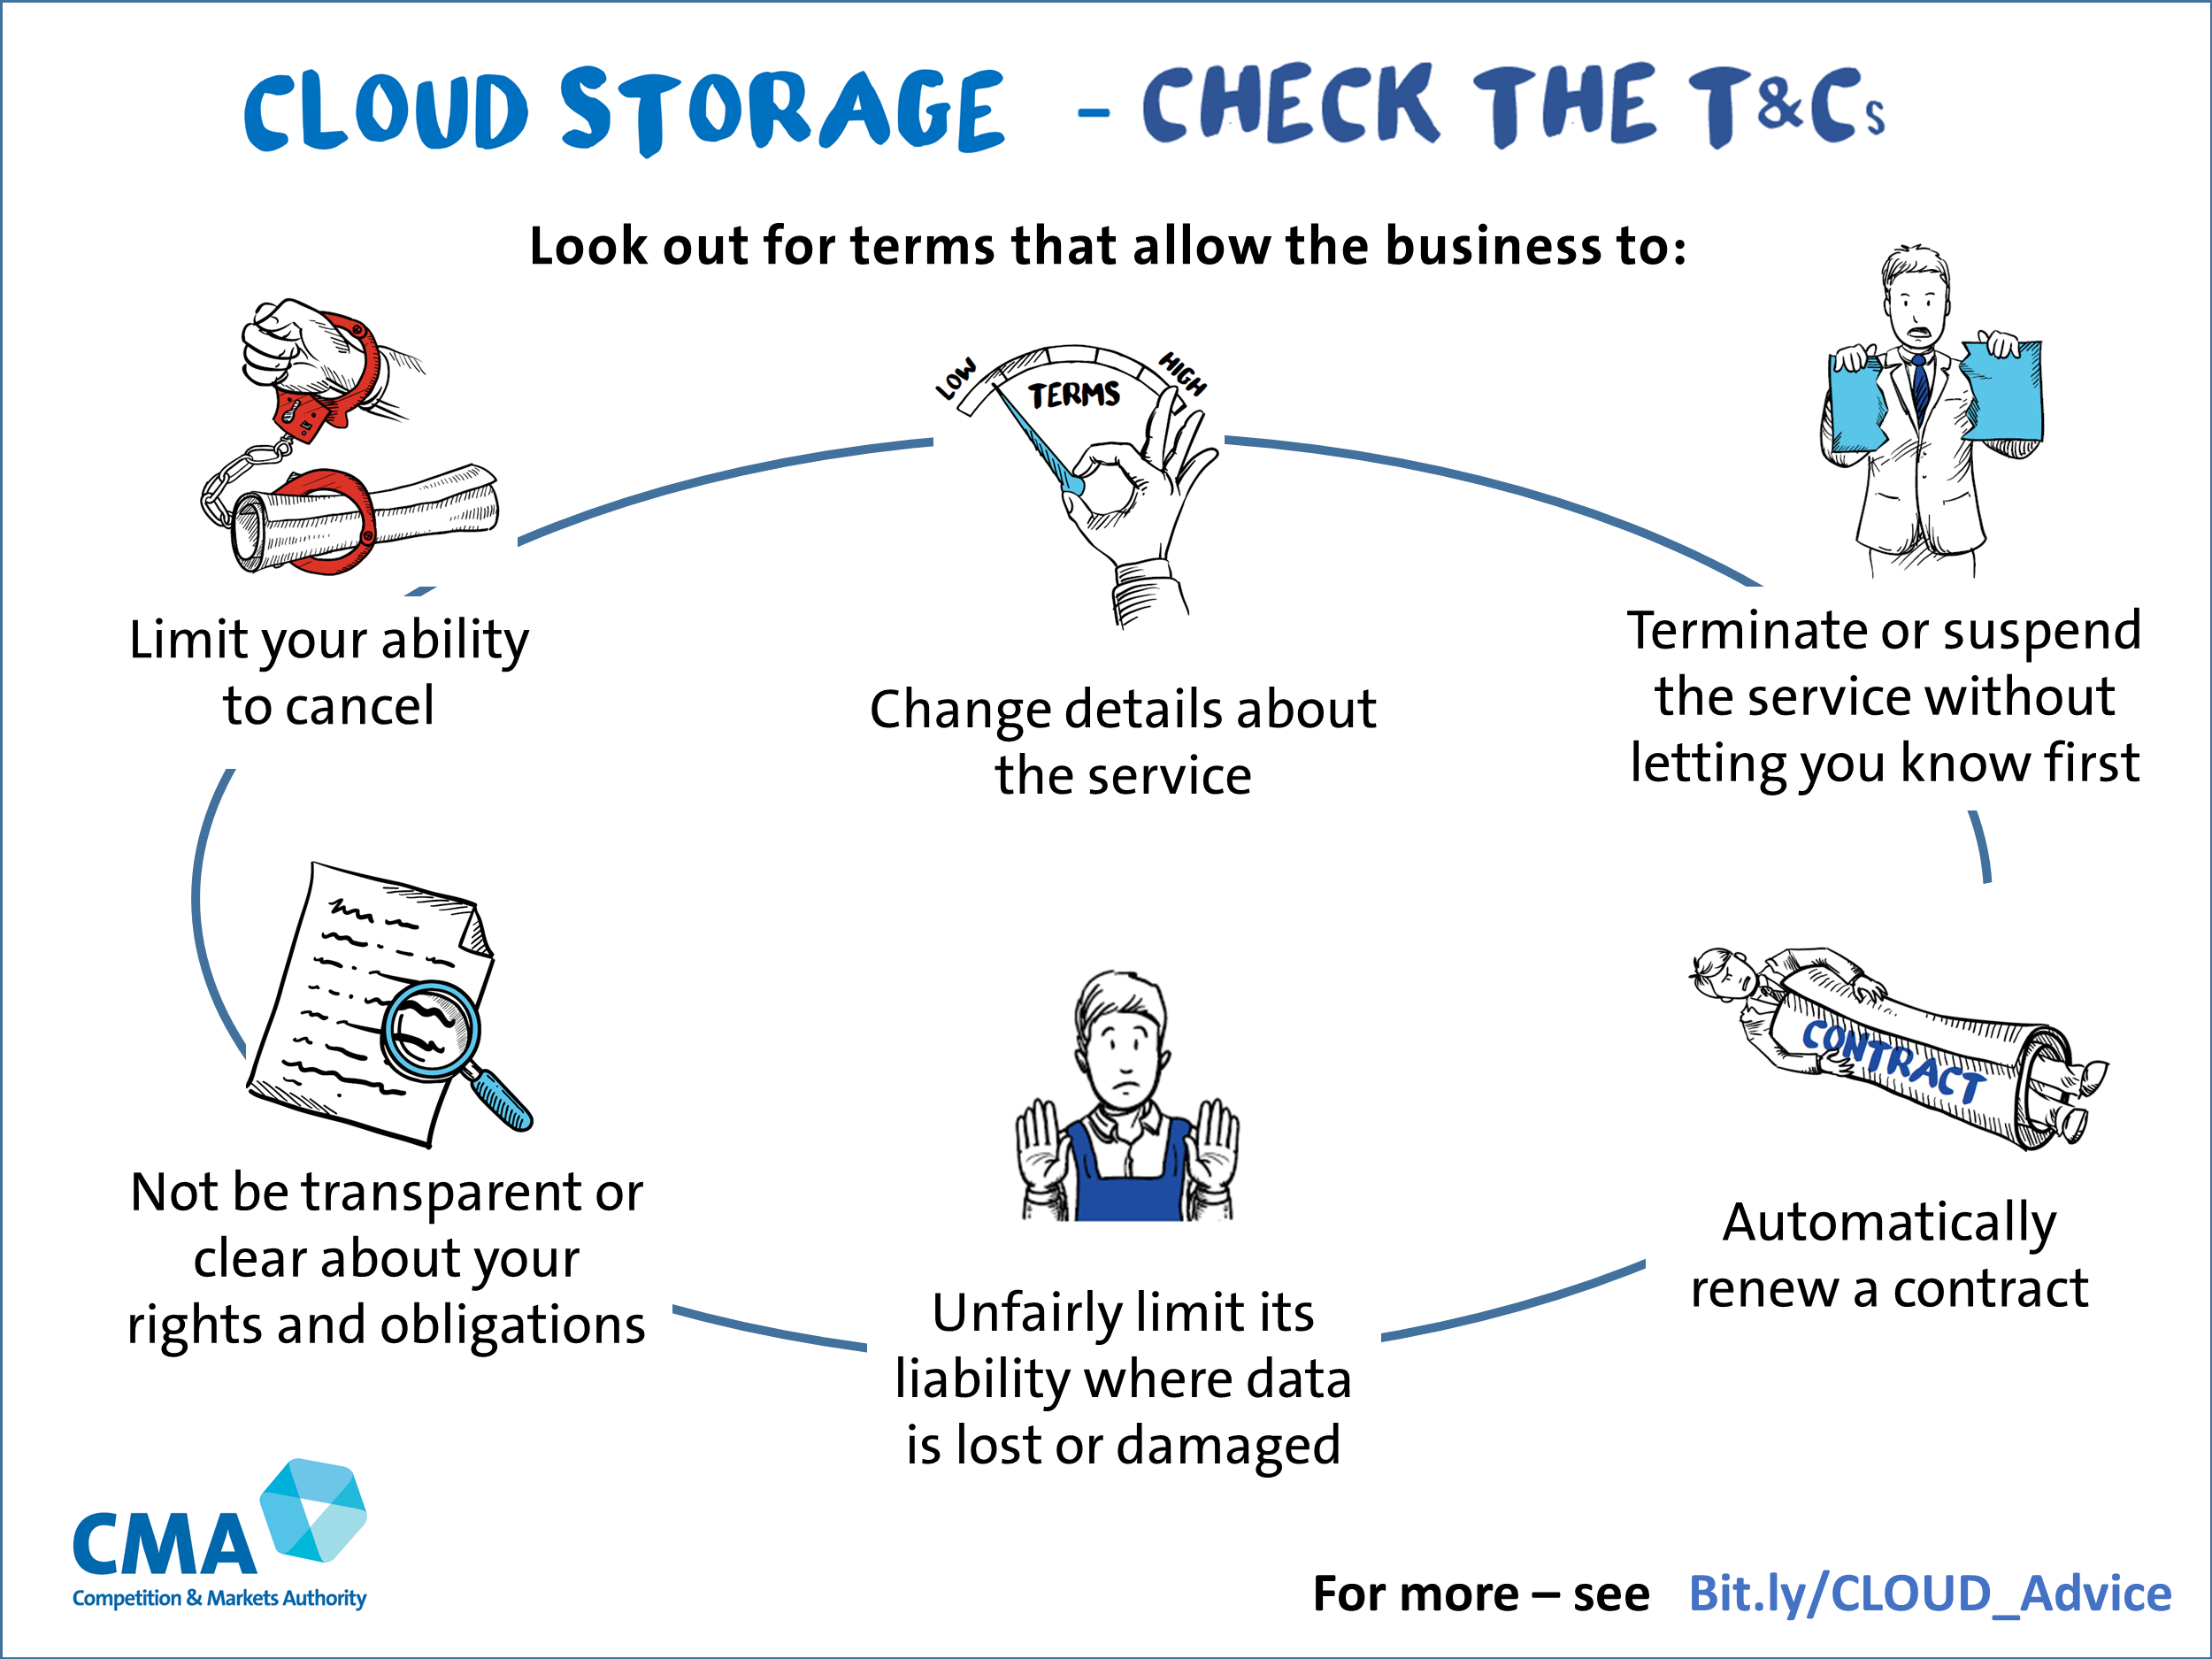 Cloud storage - T&Cs